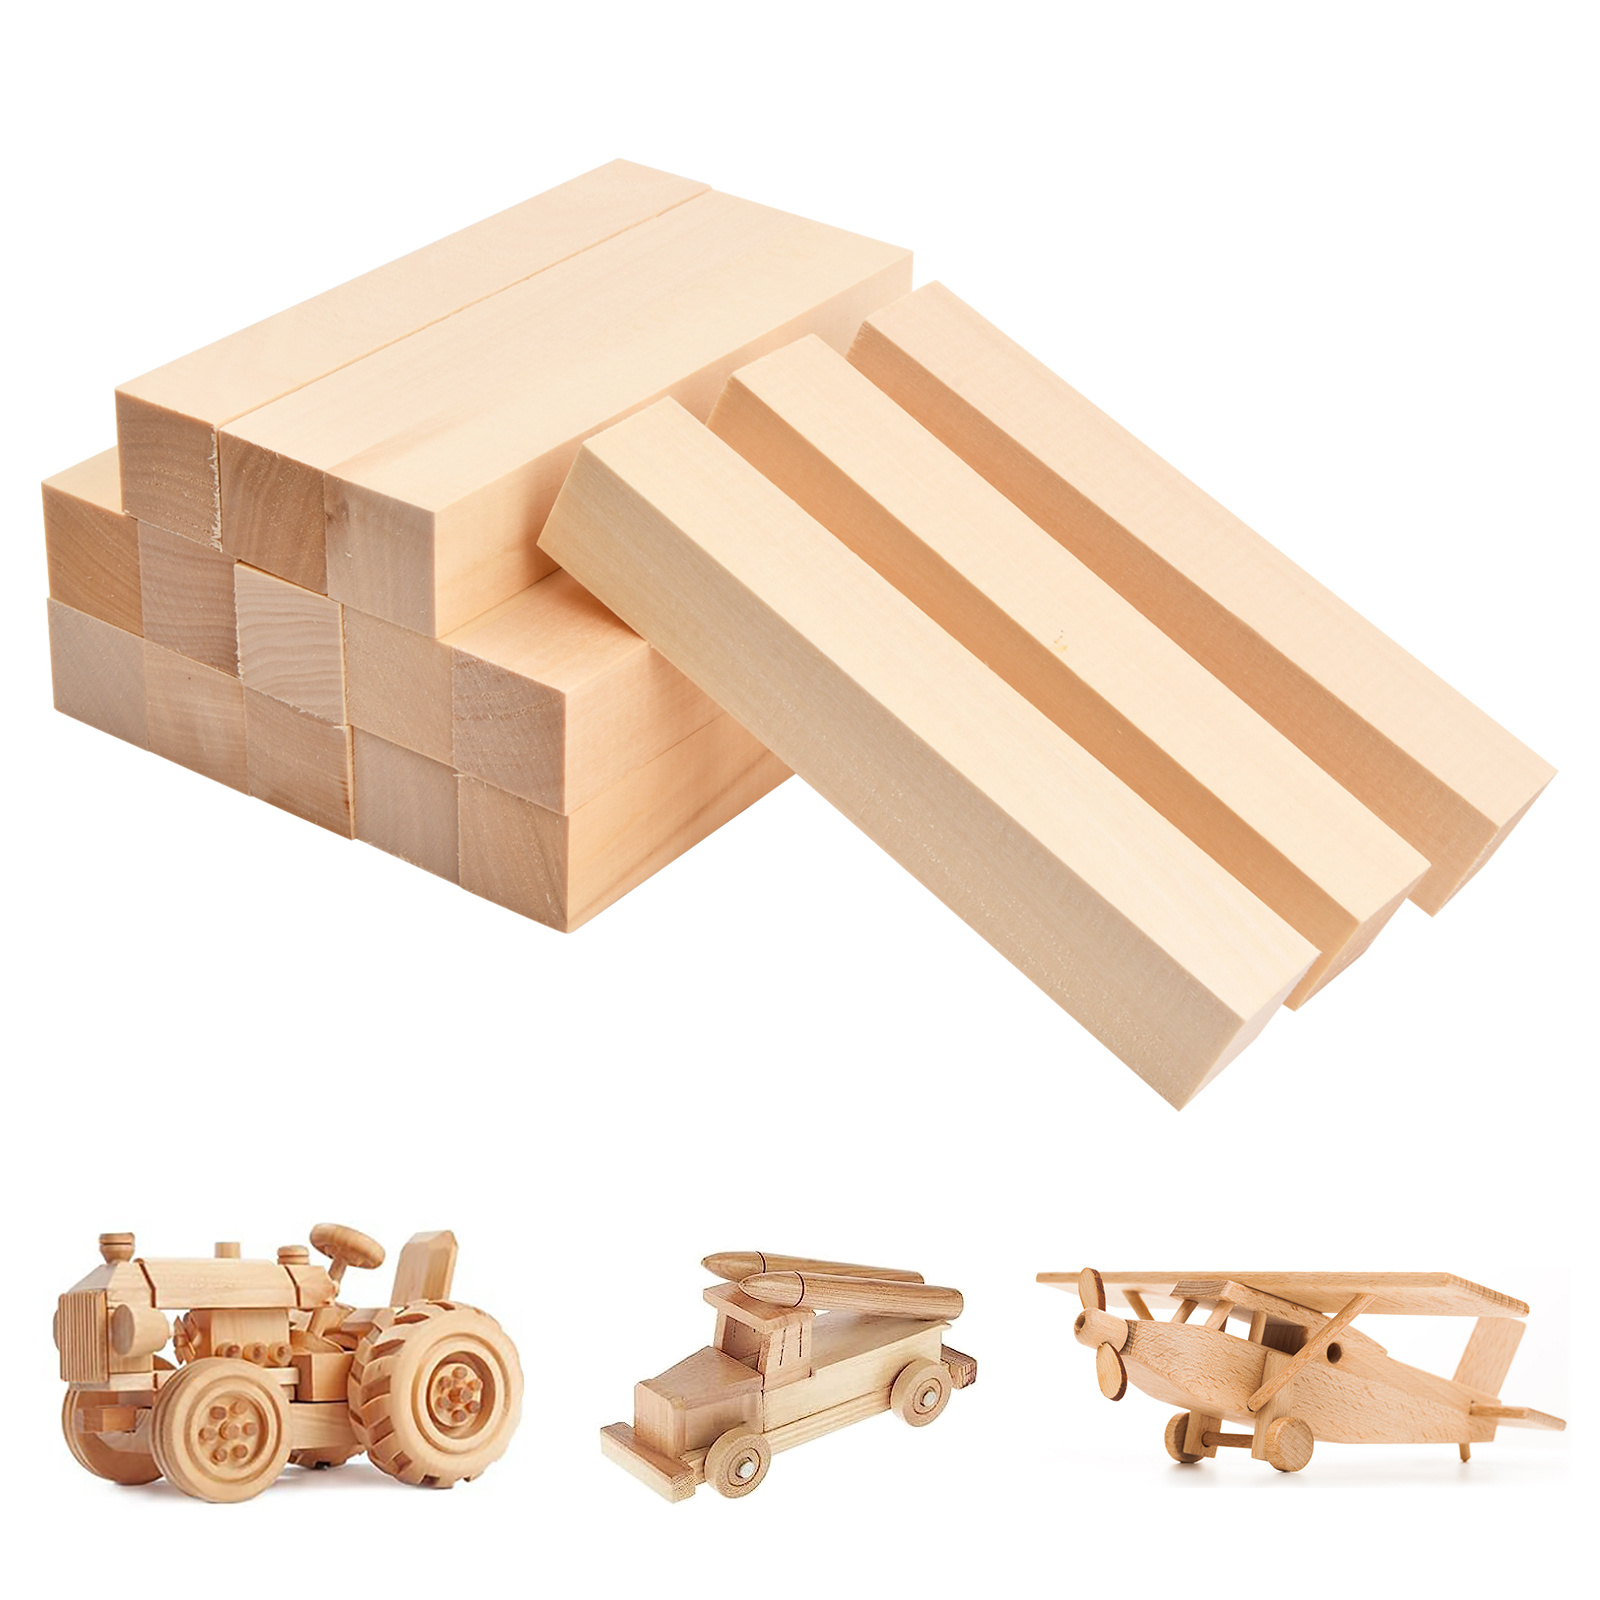 2x Beechwood Wood Carving Blocks - Whittling Blanks Plaque DIY Hobby Art  Crafts